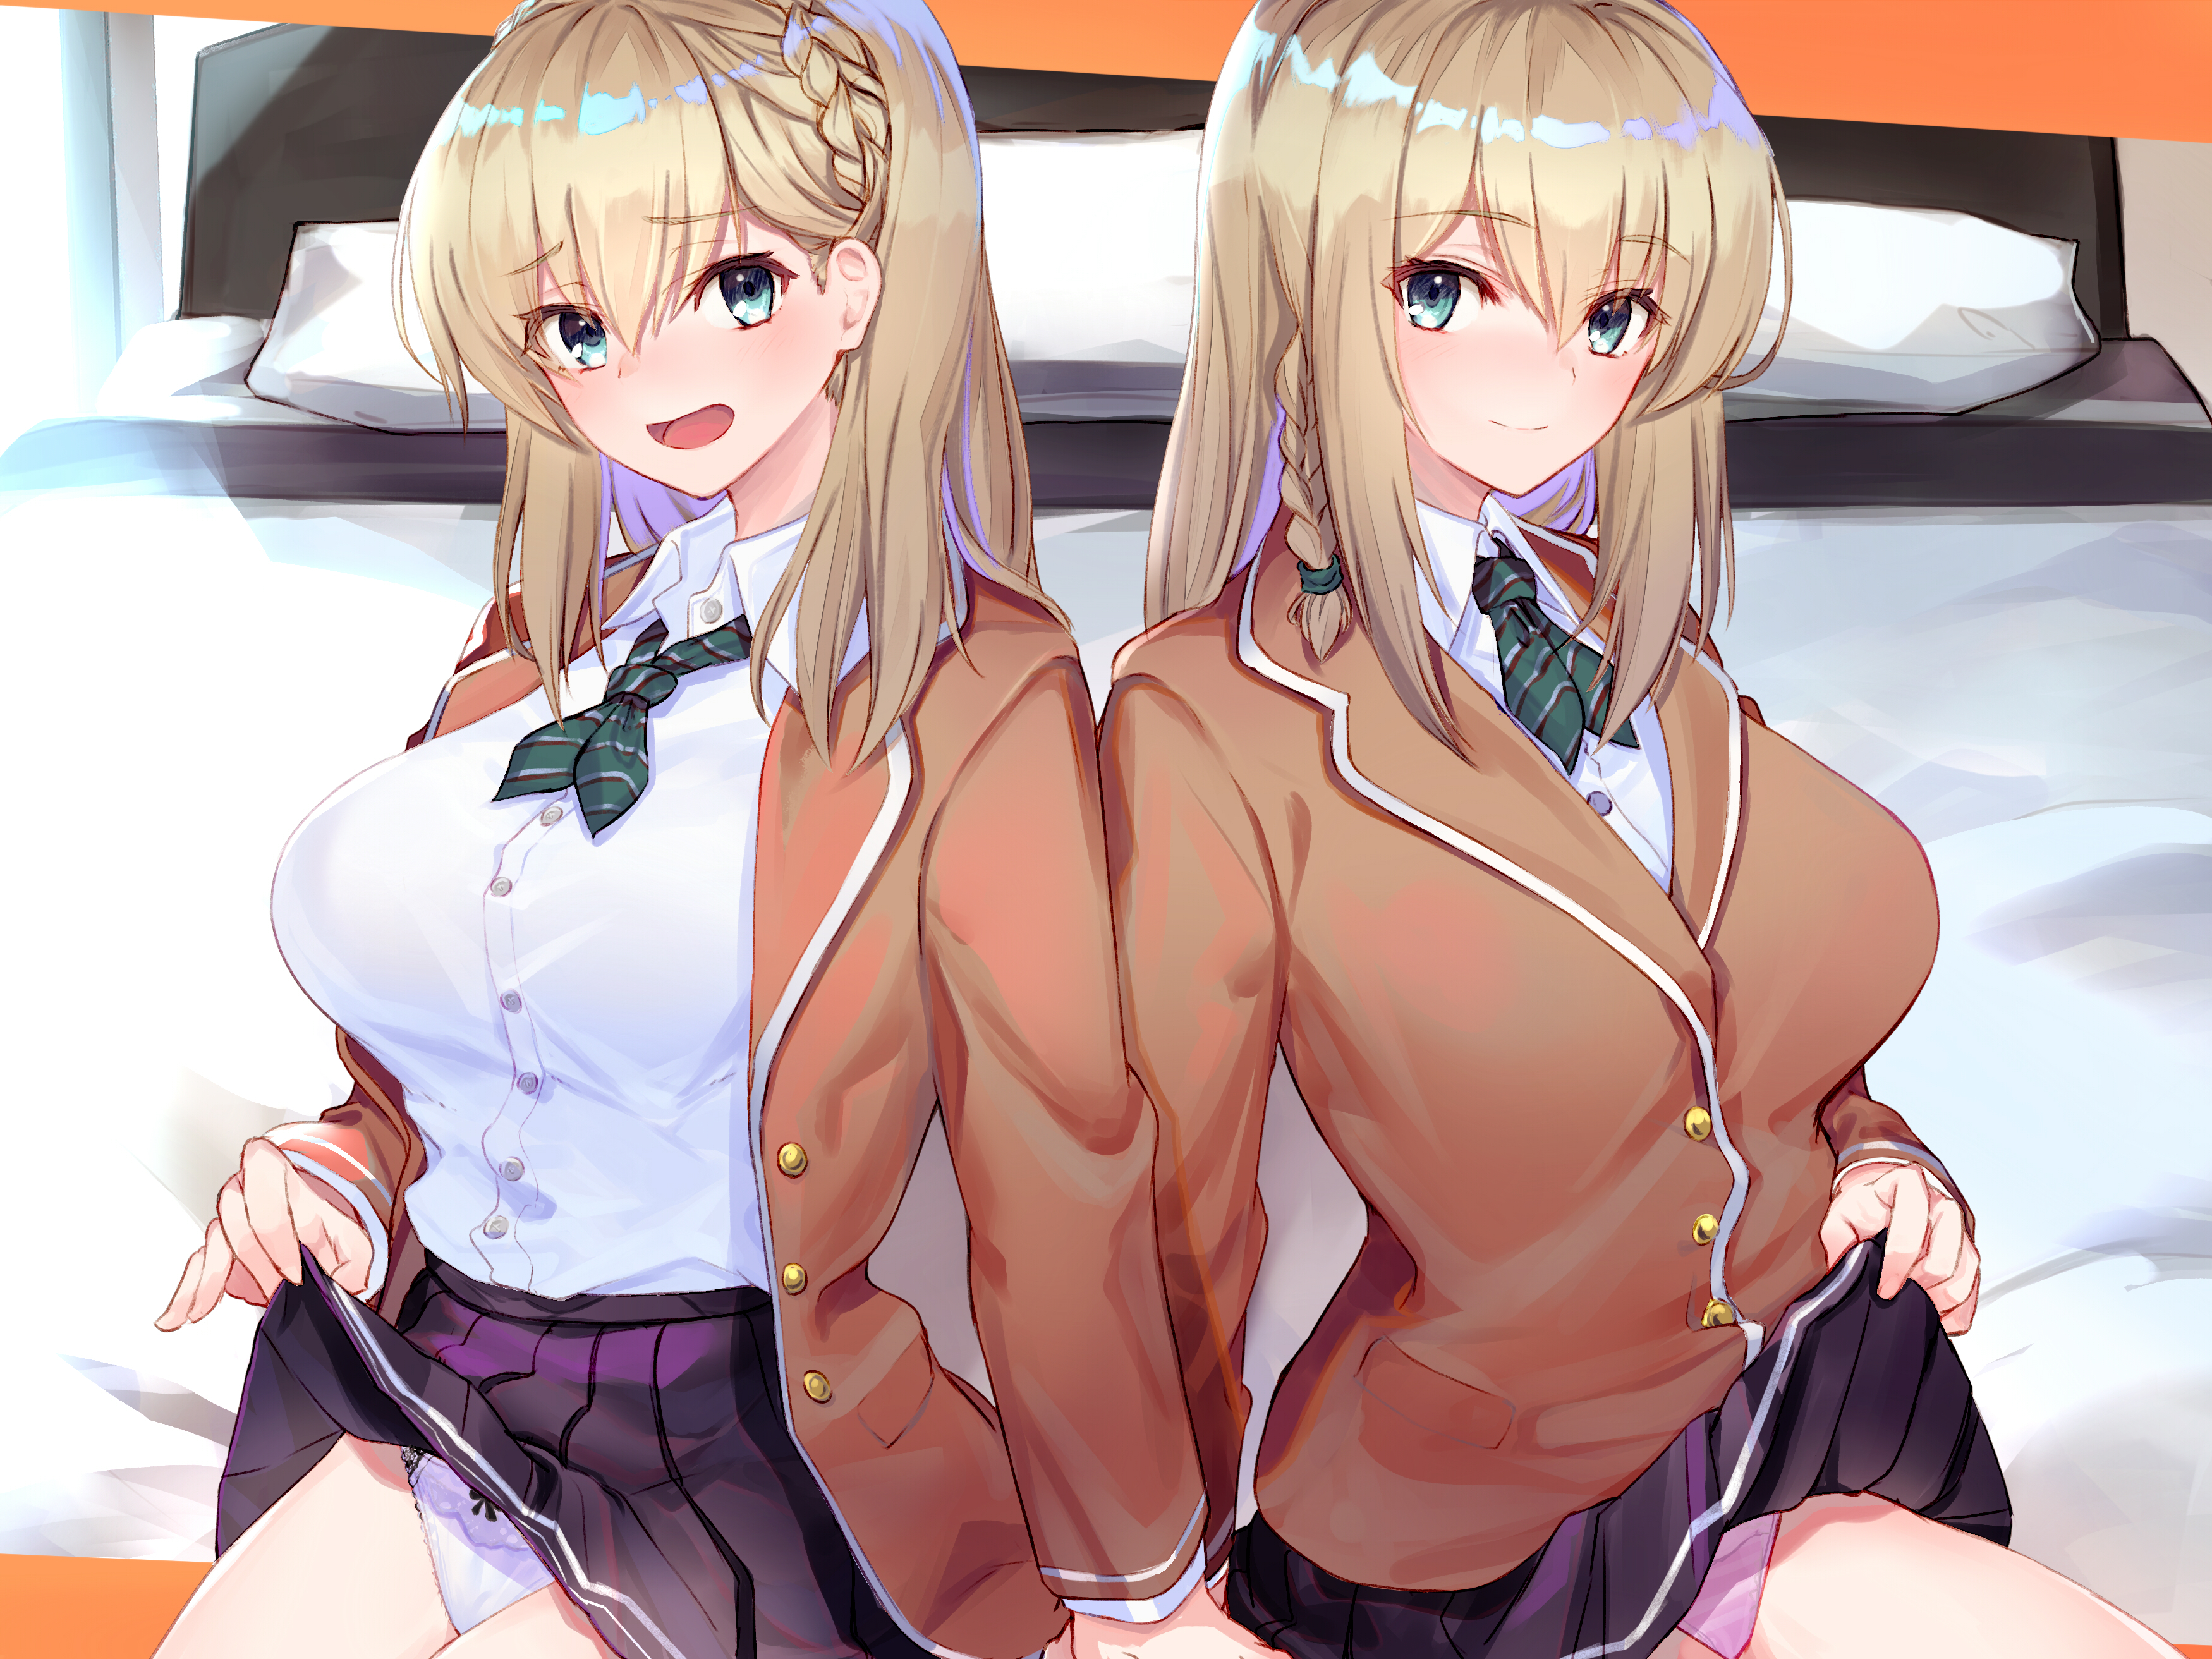 Anime 3500x2625 anime anime girls original characters twins two women artwork digital art fan art panties lifting skirt schoolgirl school uniform